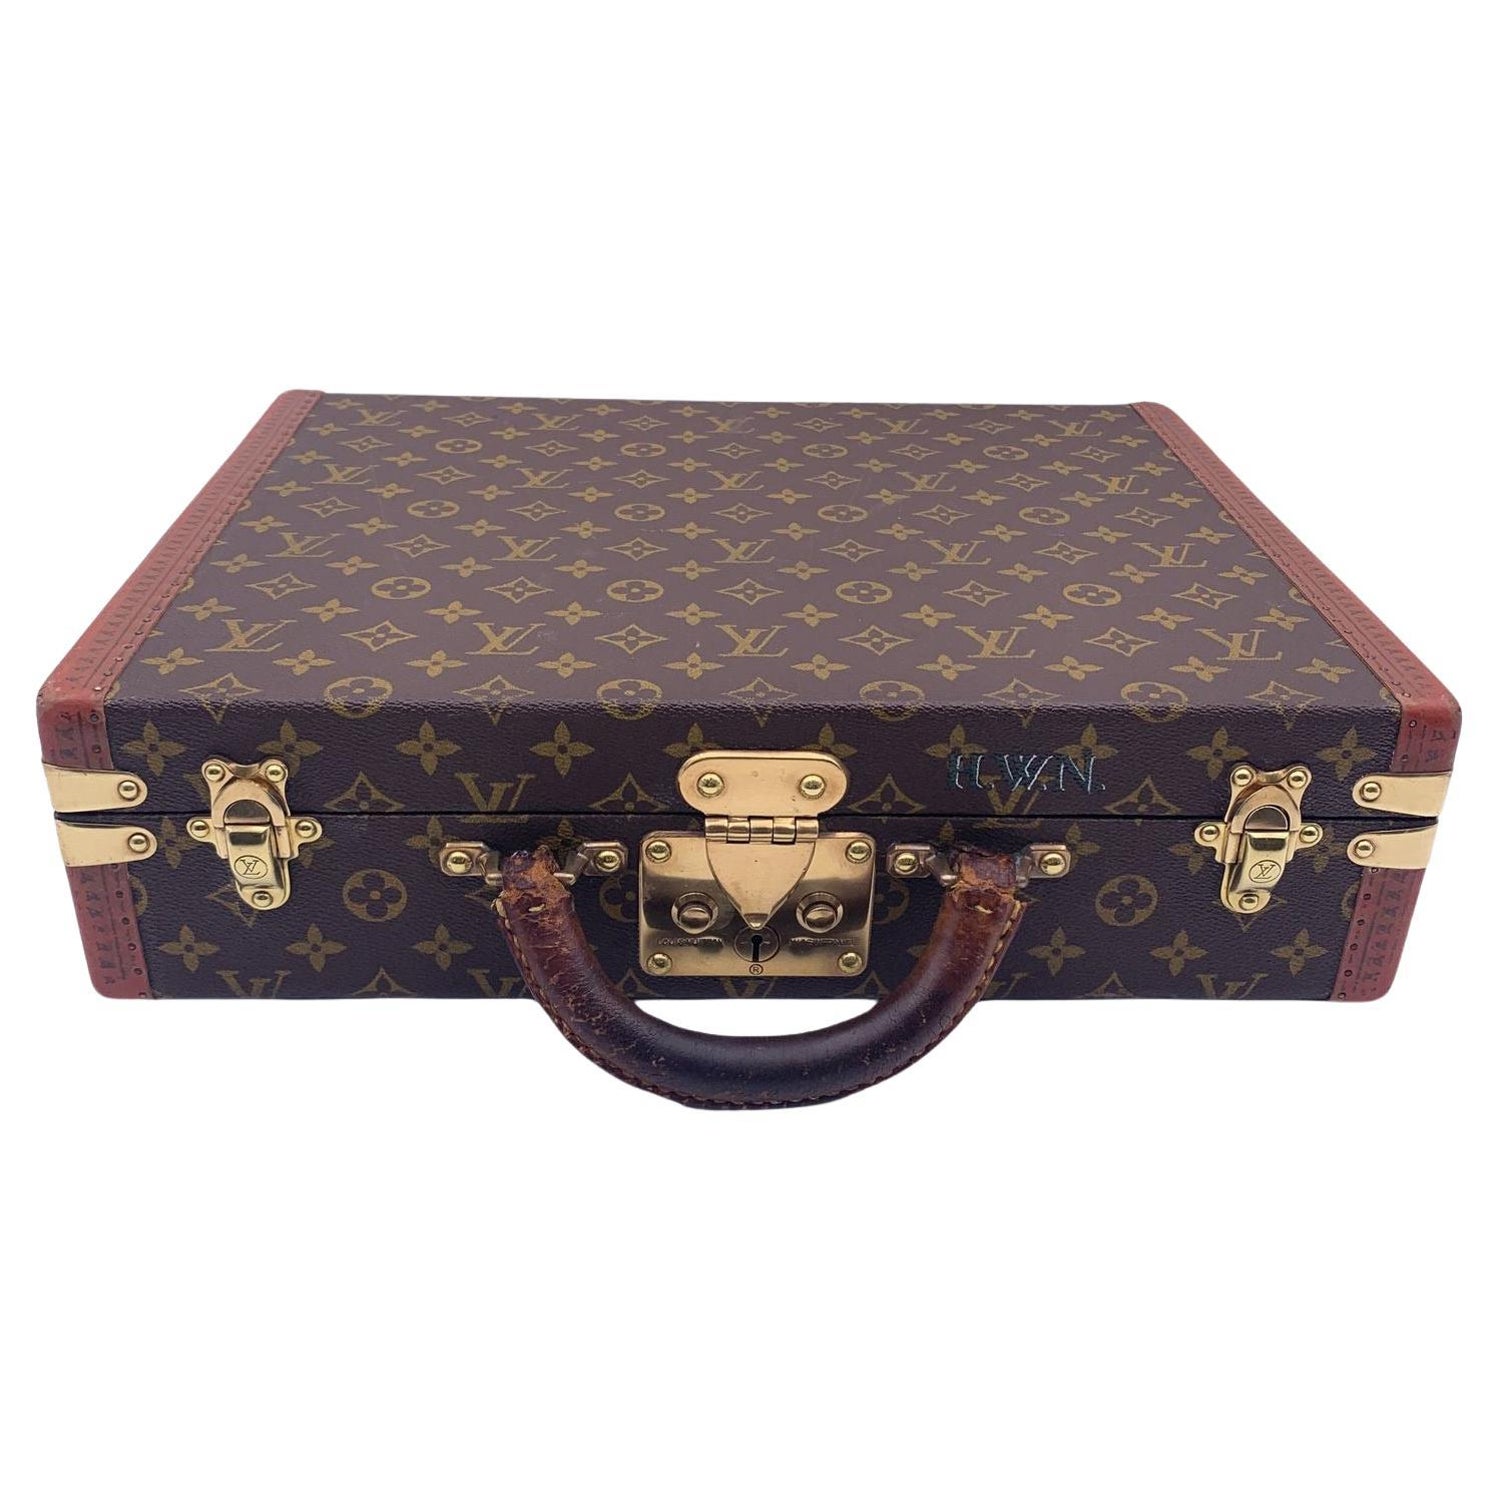 Louis Vuitton Gift Storage Box - Brown Large Empty 19 x 17.5 x